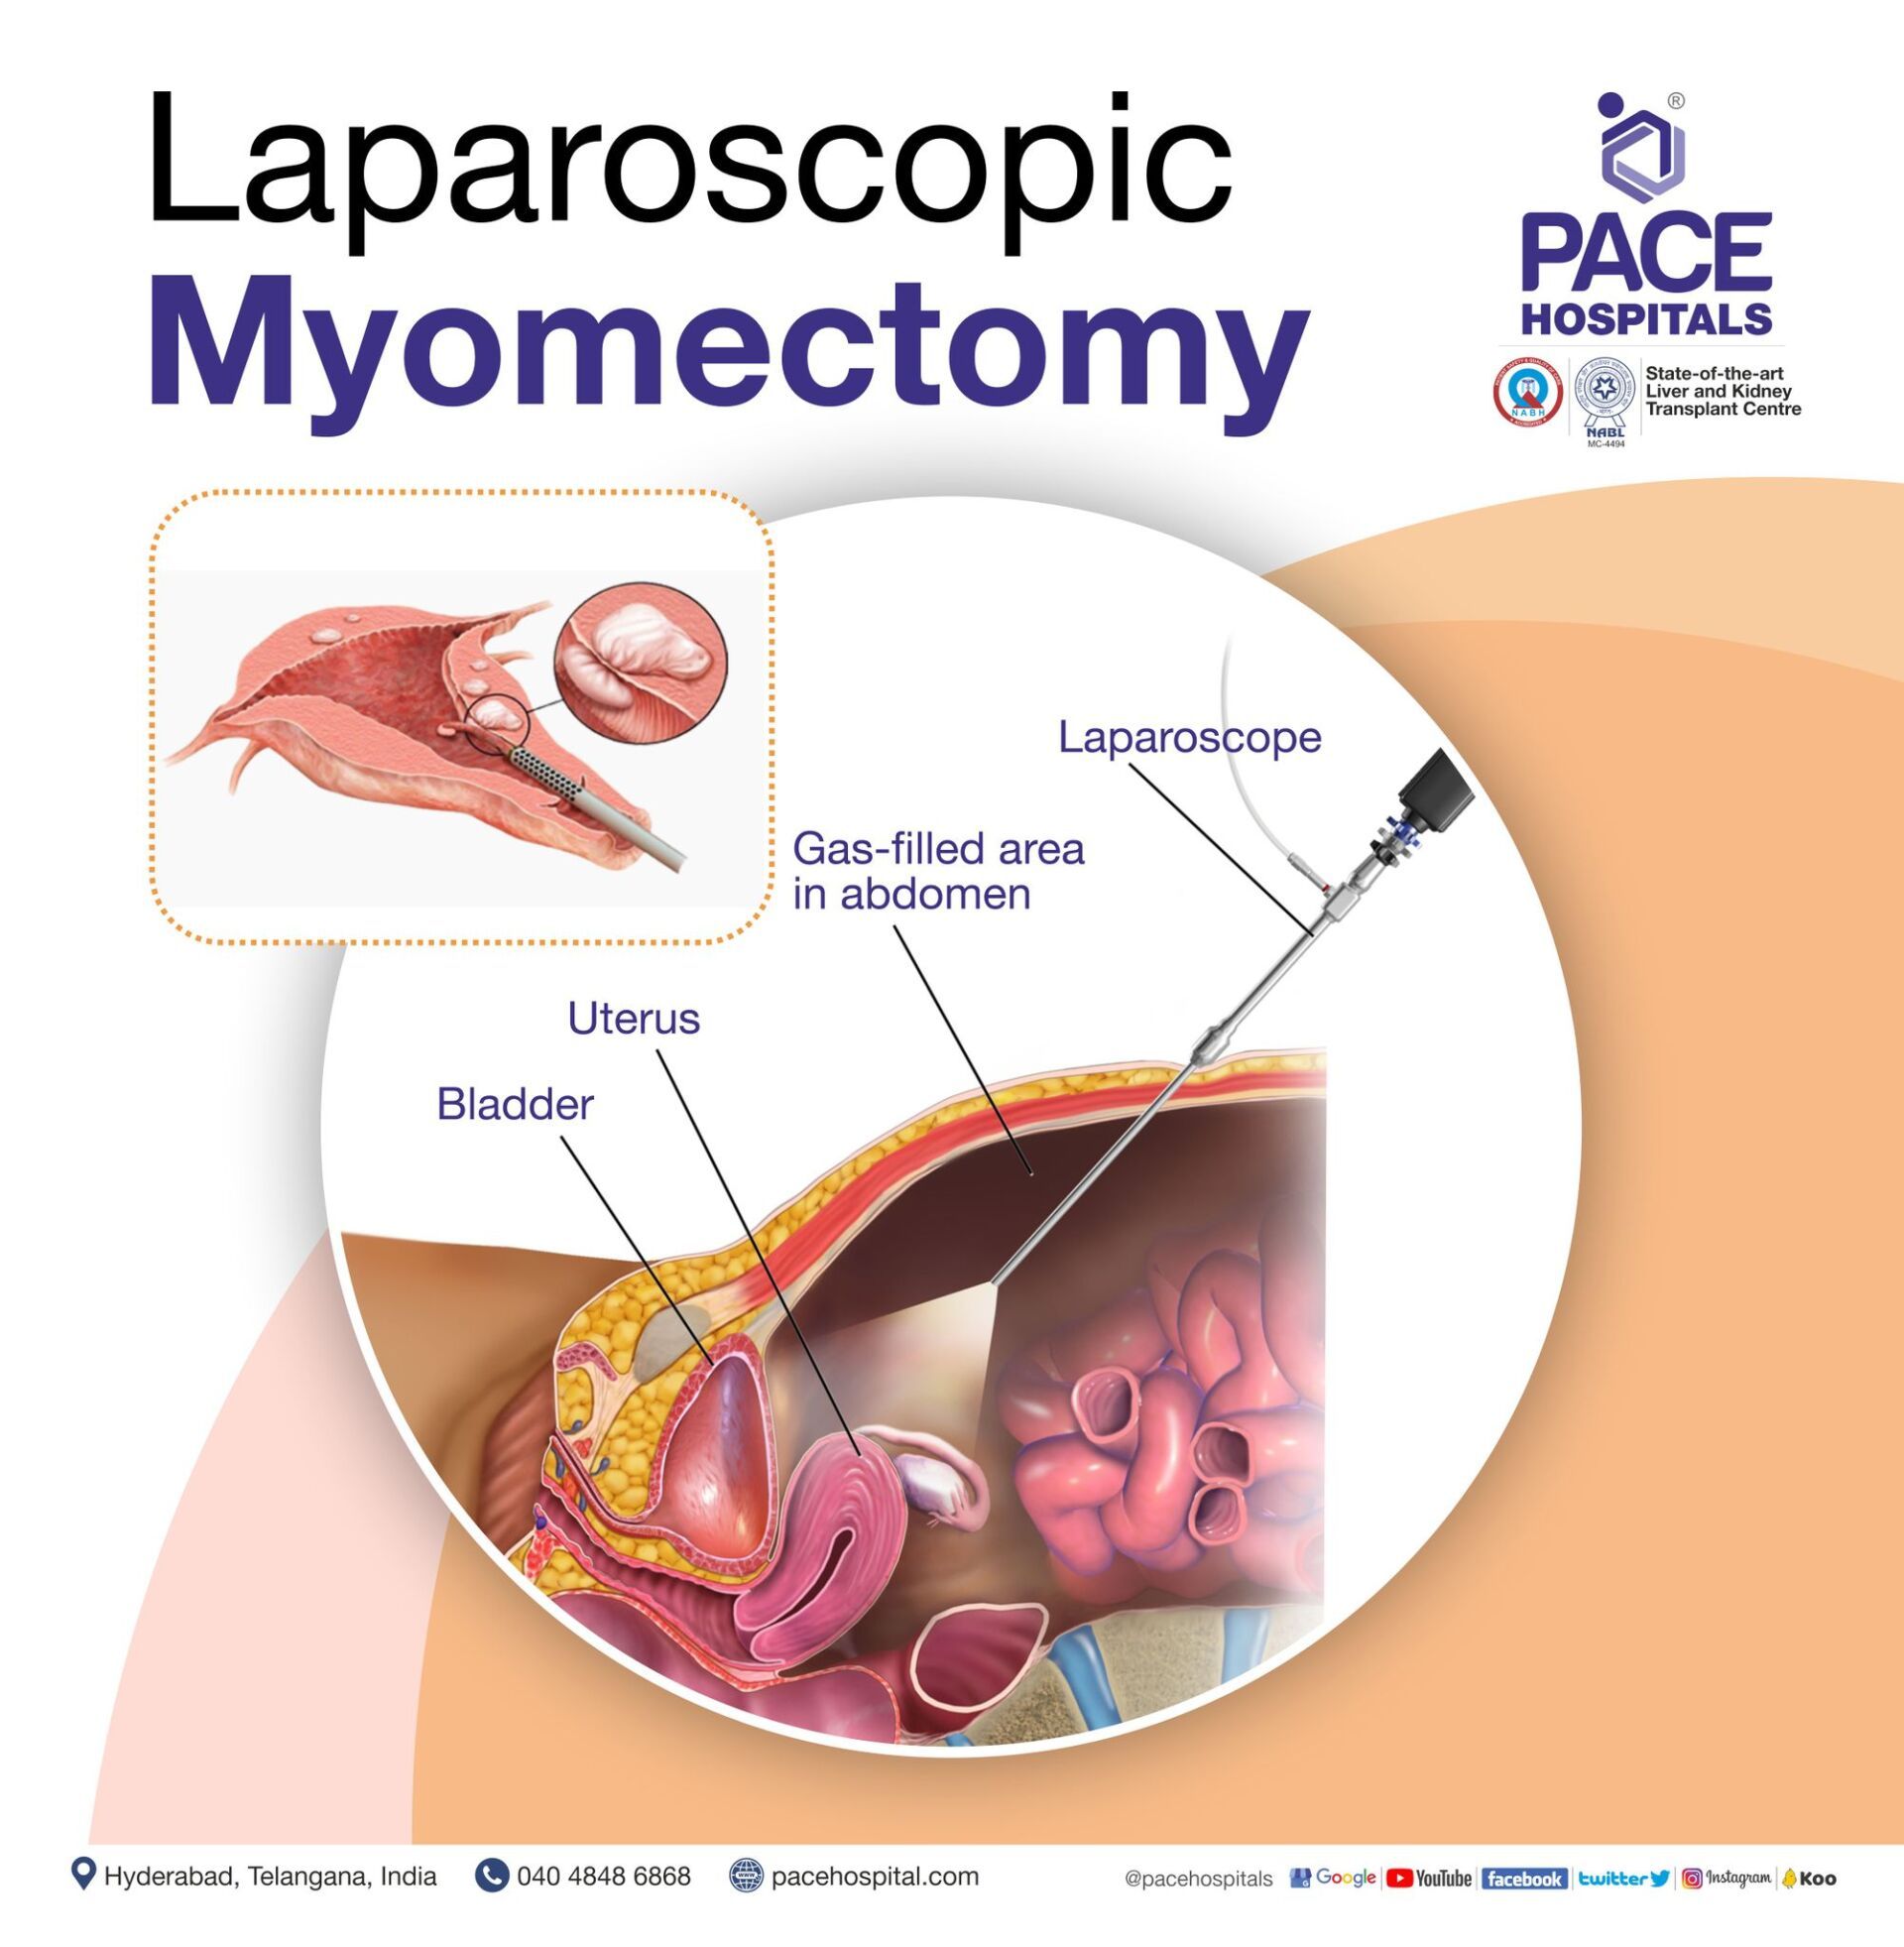 Laparoscopic Myomectomy in Hyderabad | Laparoscopic Myomectomy in India | Laparoscopic Myomectomy surgery